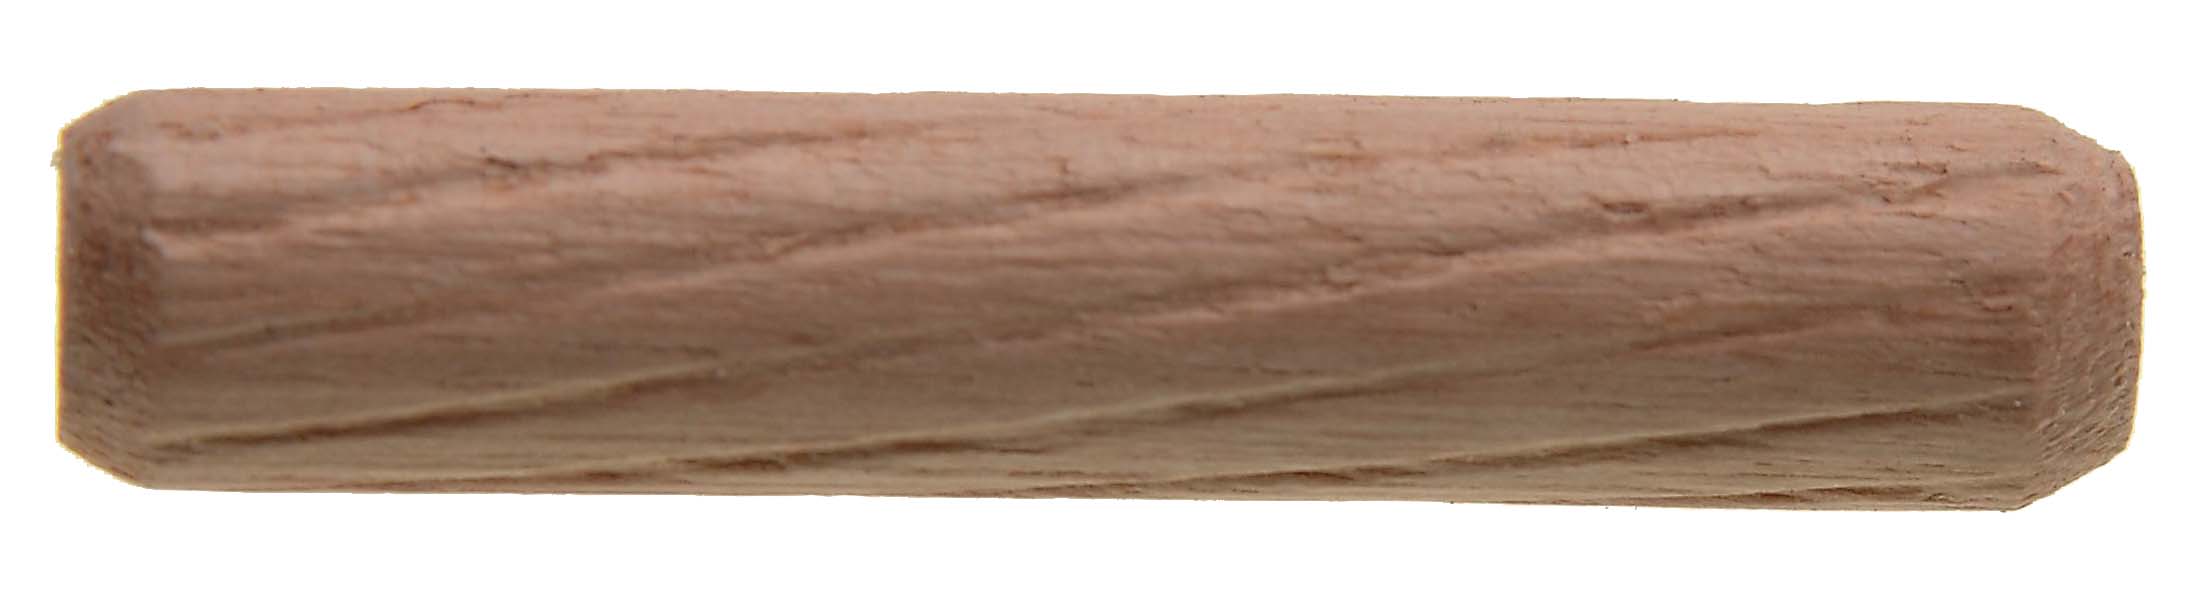 Wooden Dowel Rods,50cm/20 Round Dowel Rod,4mm/0.16 Stick,200 Pack - Wood  Color - On Sale - Bed Bath & Beyond - 38917698